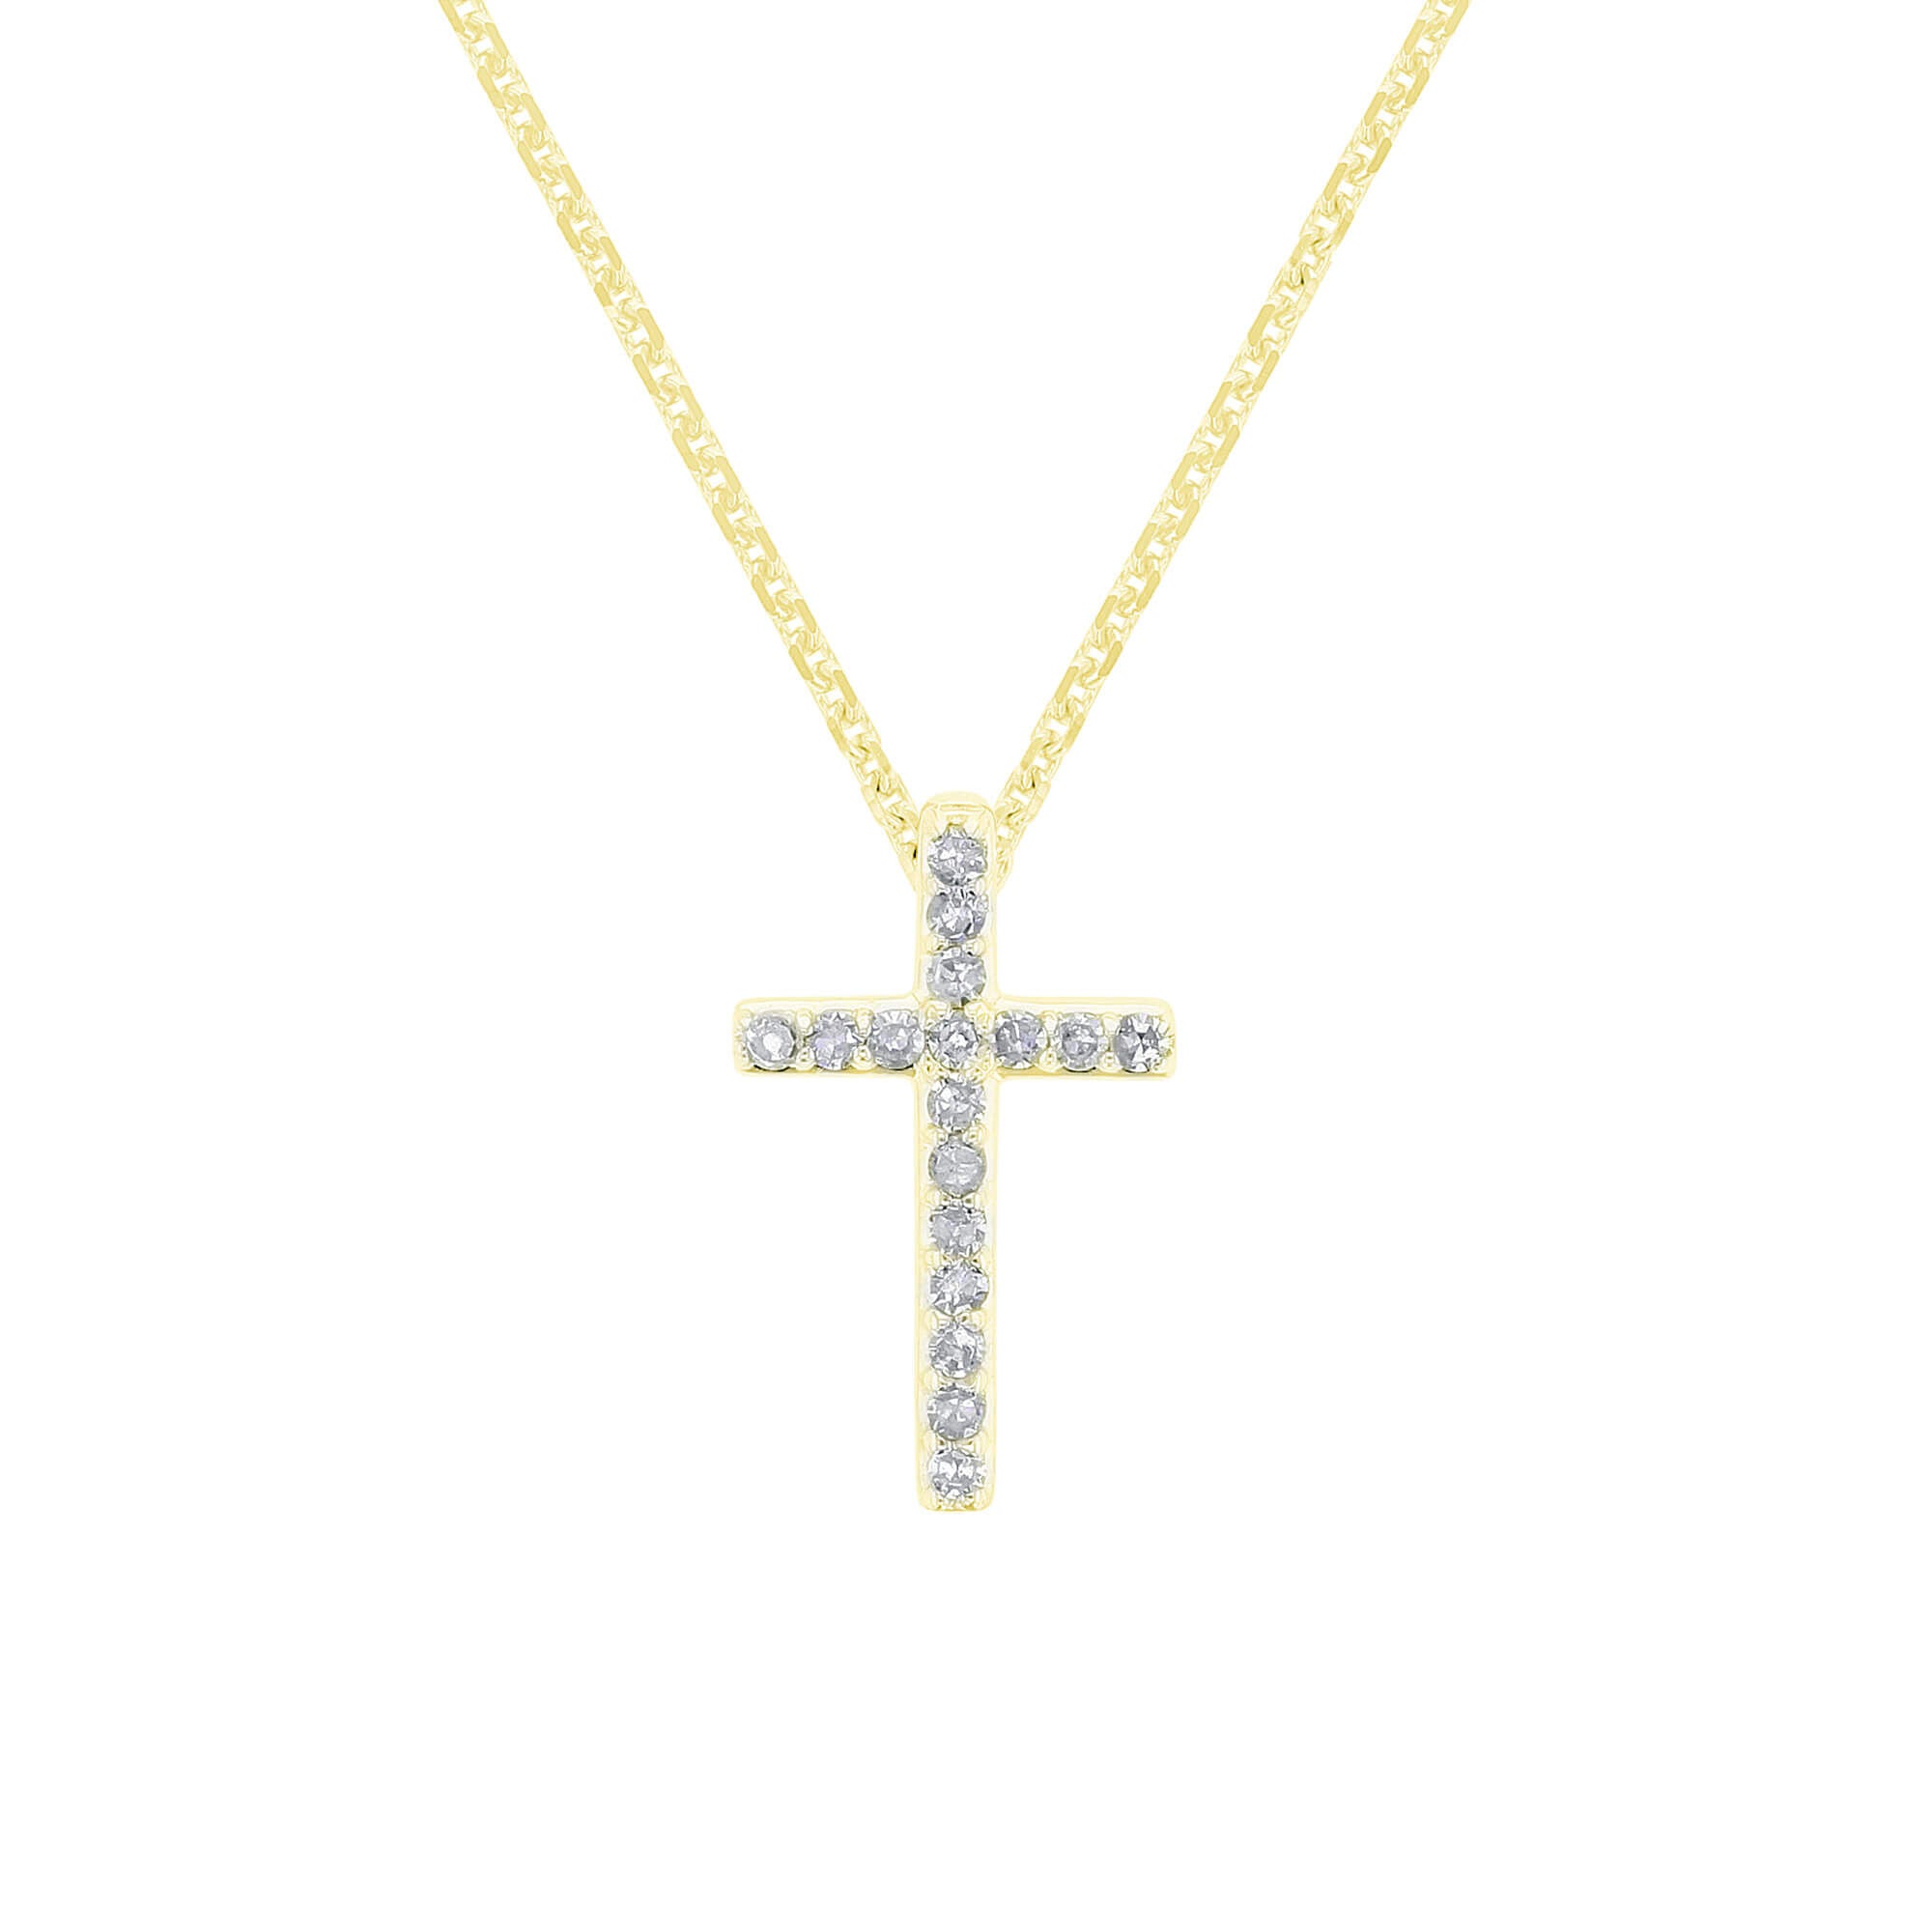 Tranquil Cross Diamond Necklace